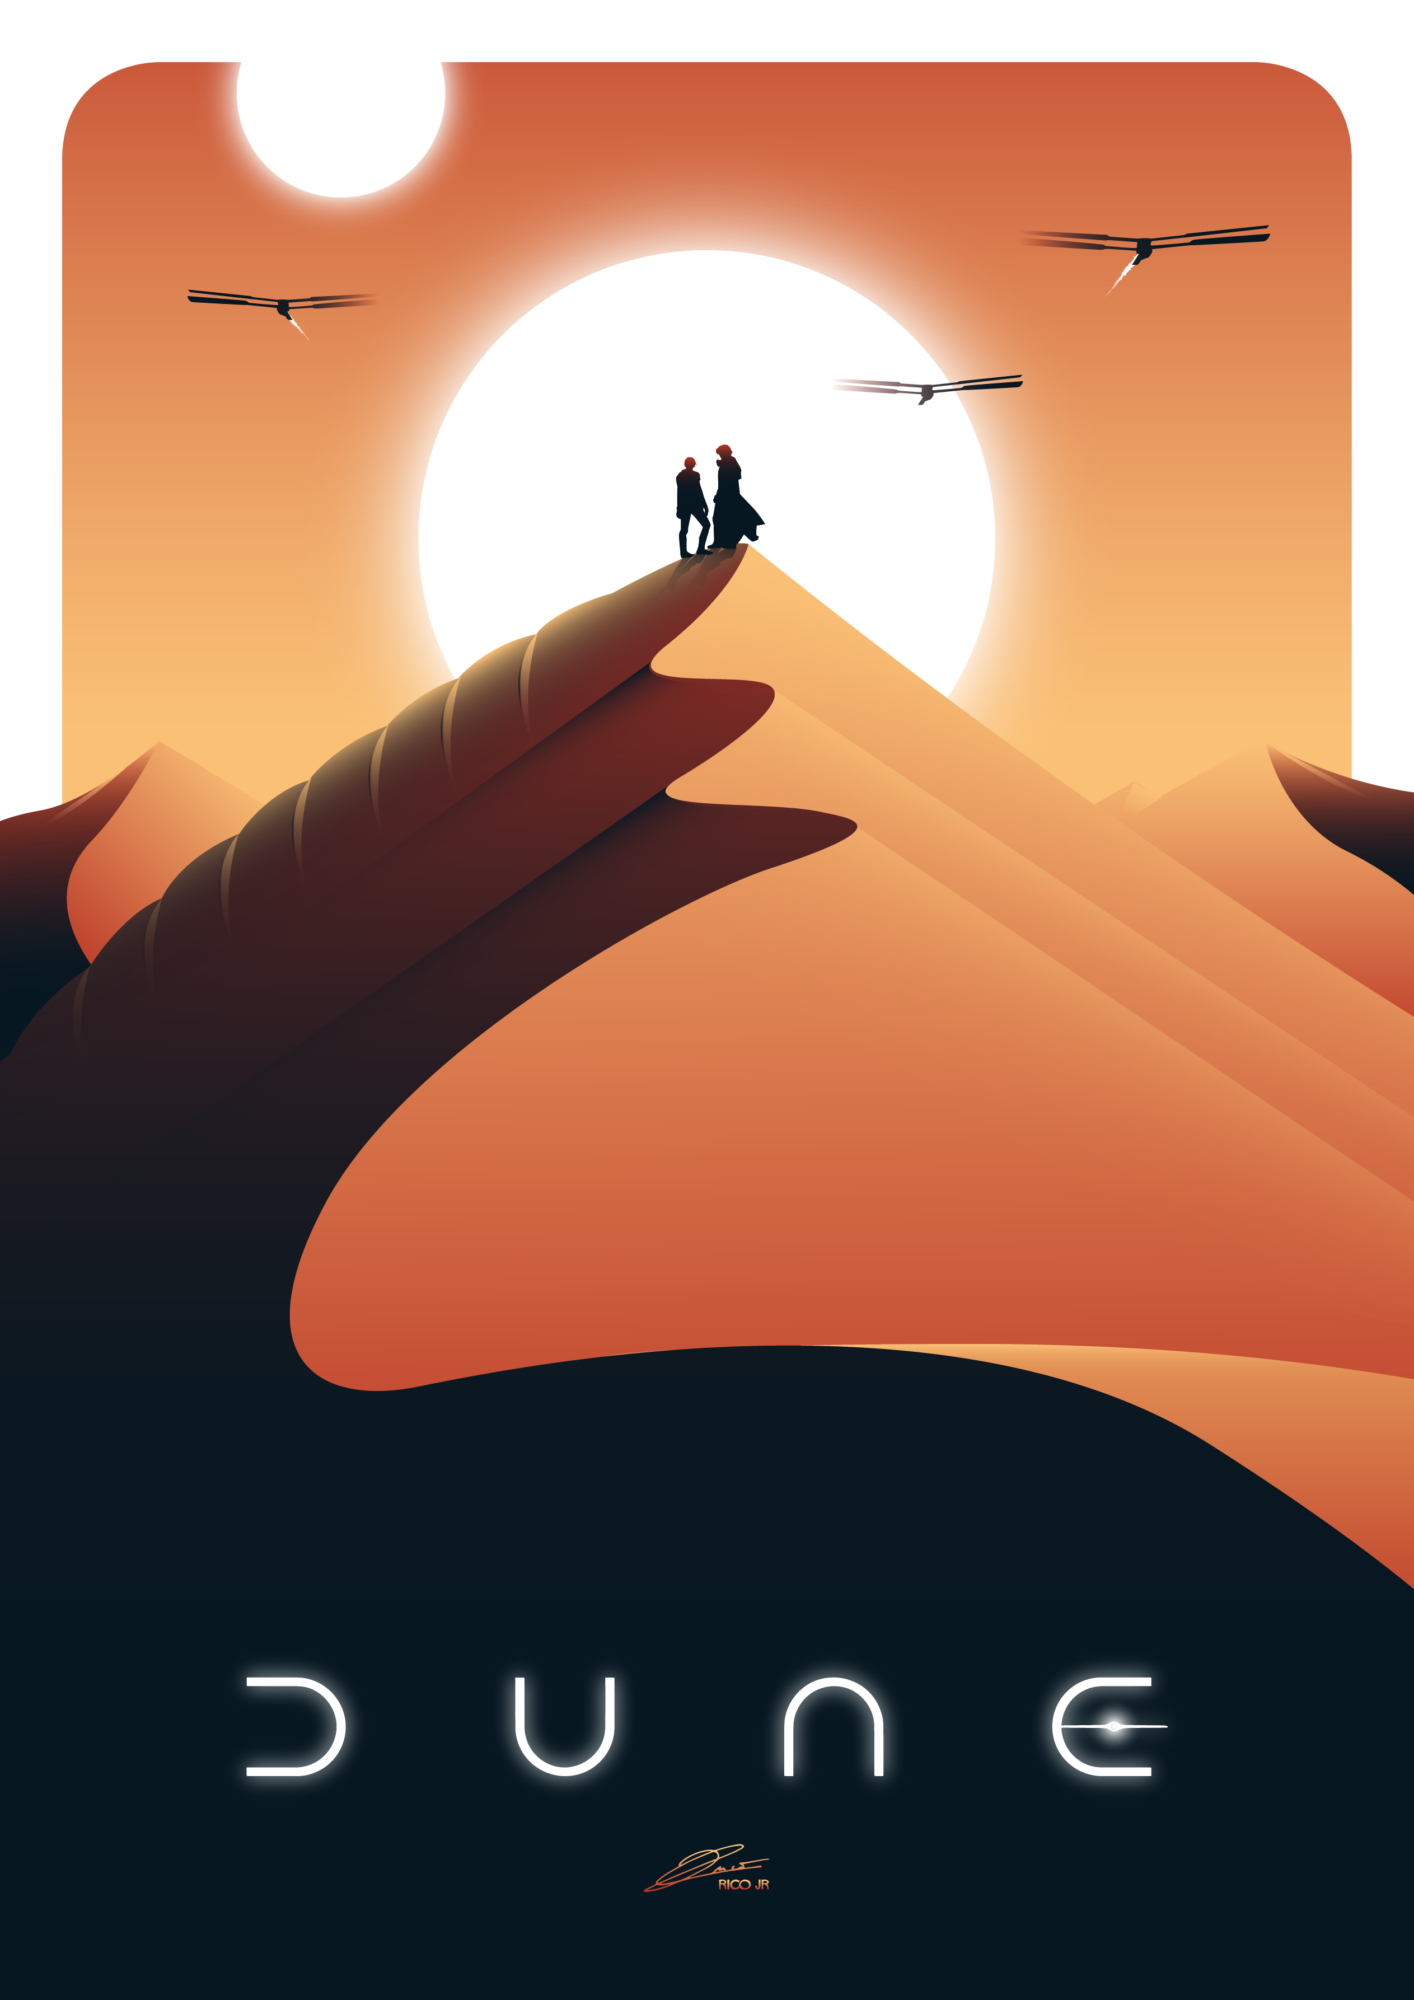 Dune poster. Дюна 2021 Постер. Дюна арт Постер. Dune плакат. Дюна плакат.